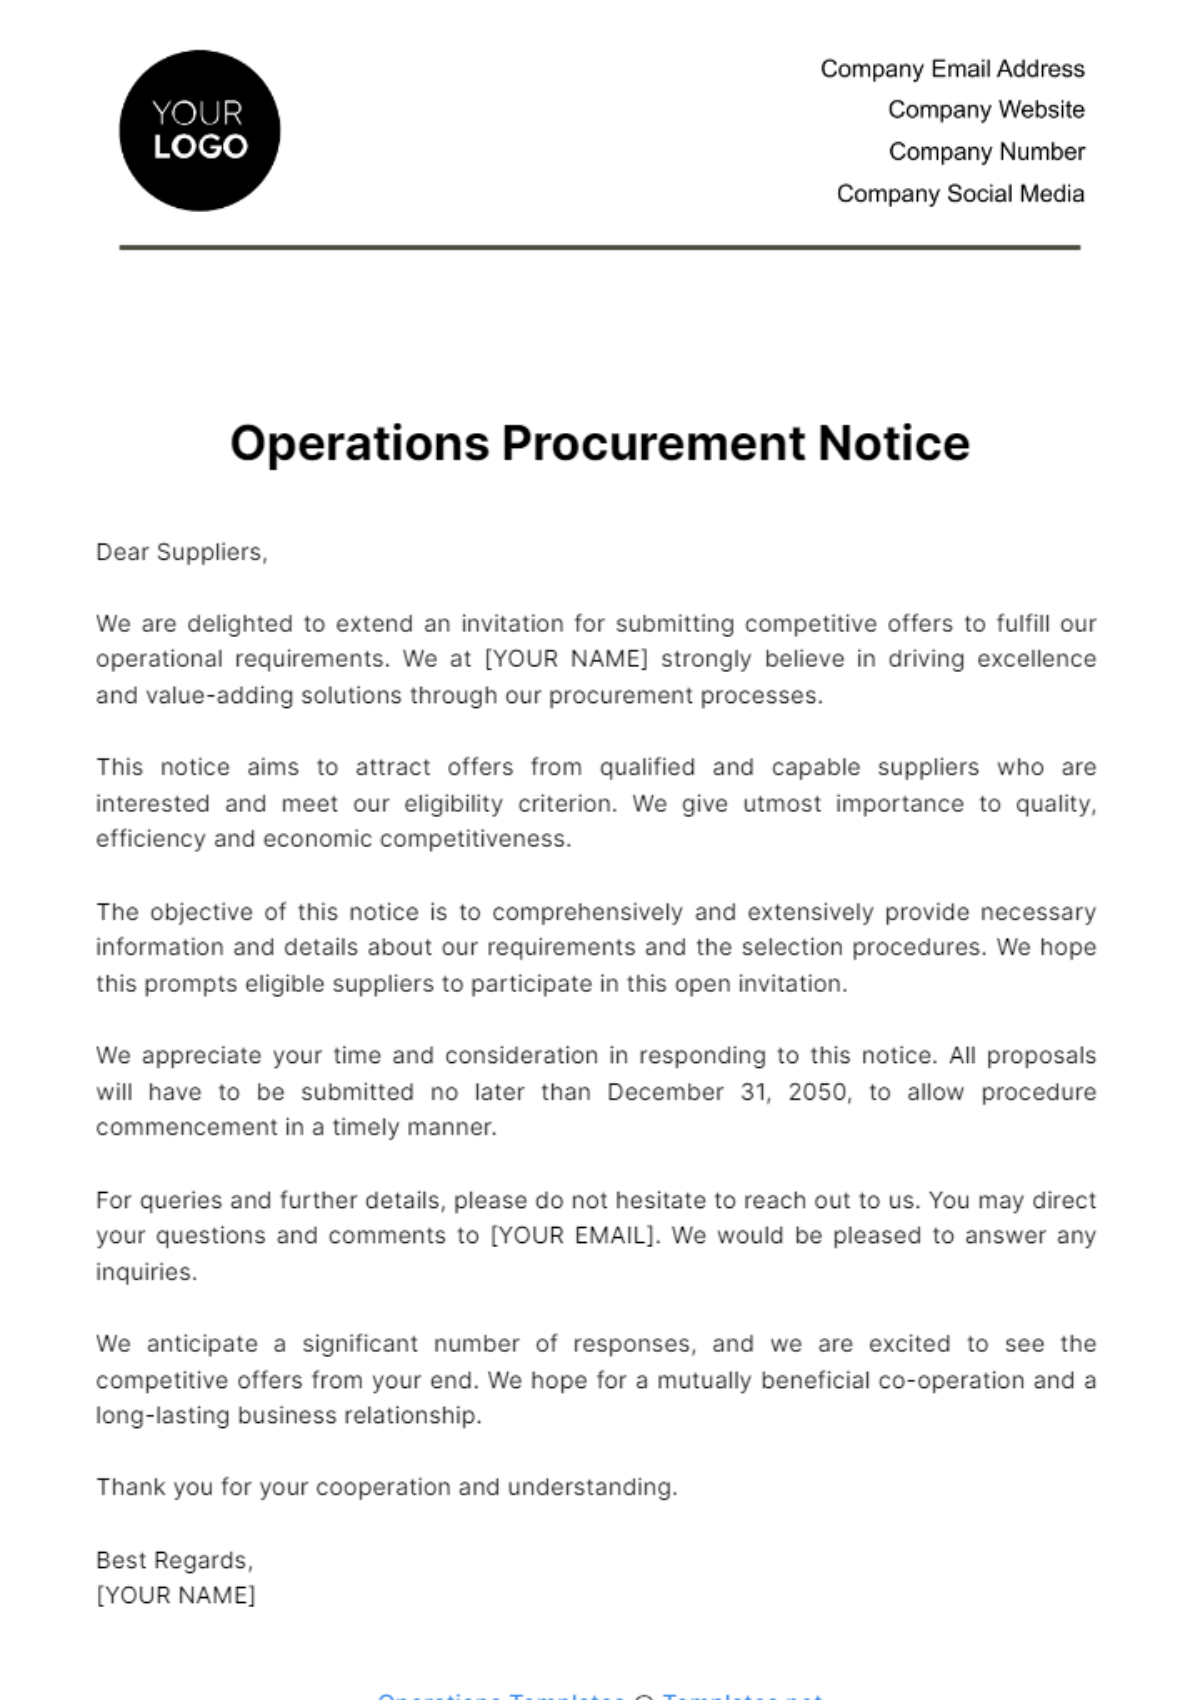 Free Operations Procurement Notice Template